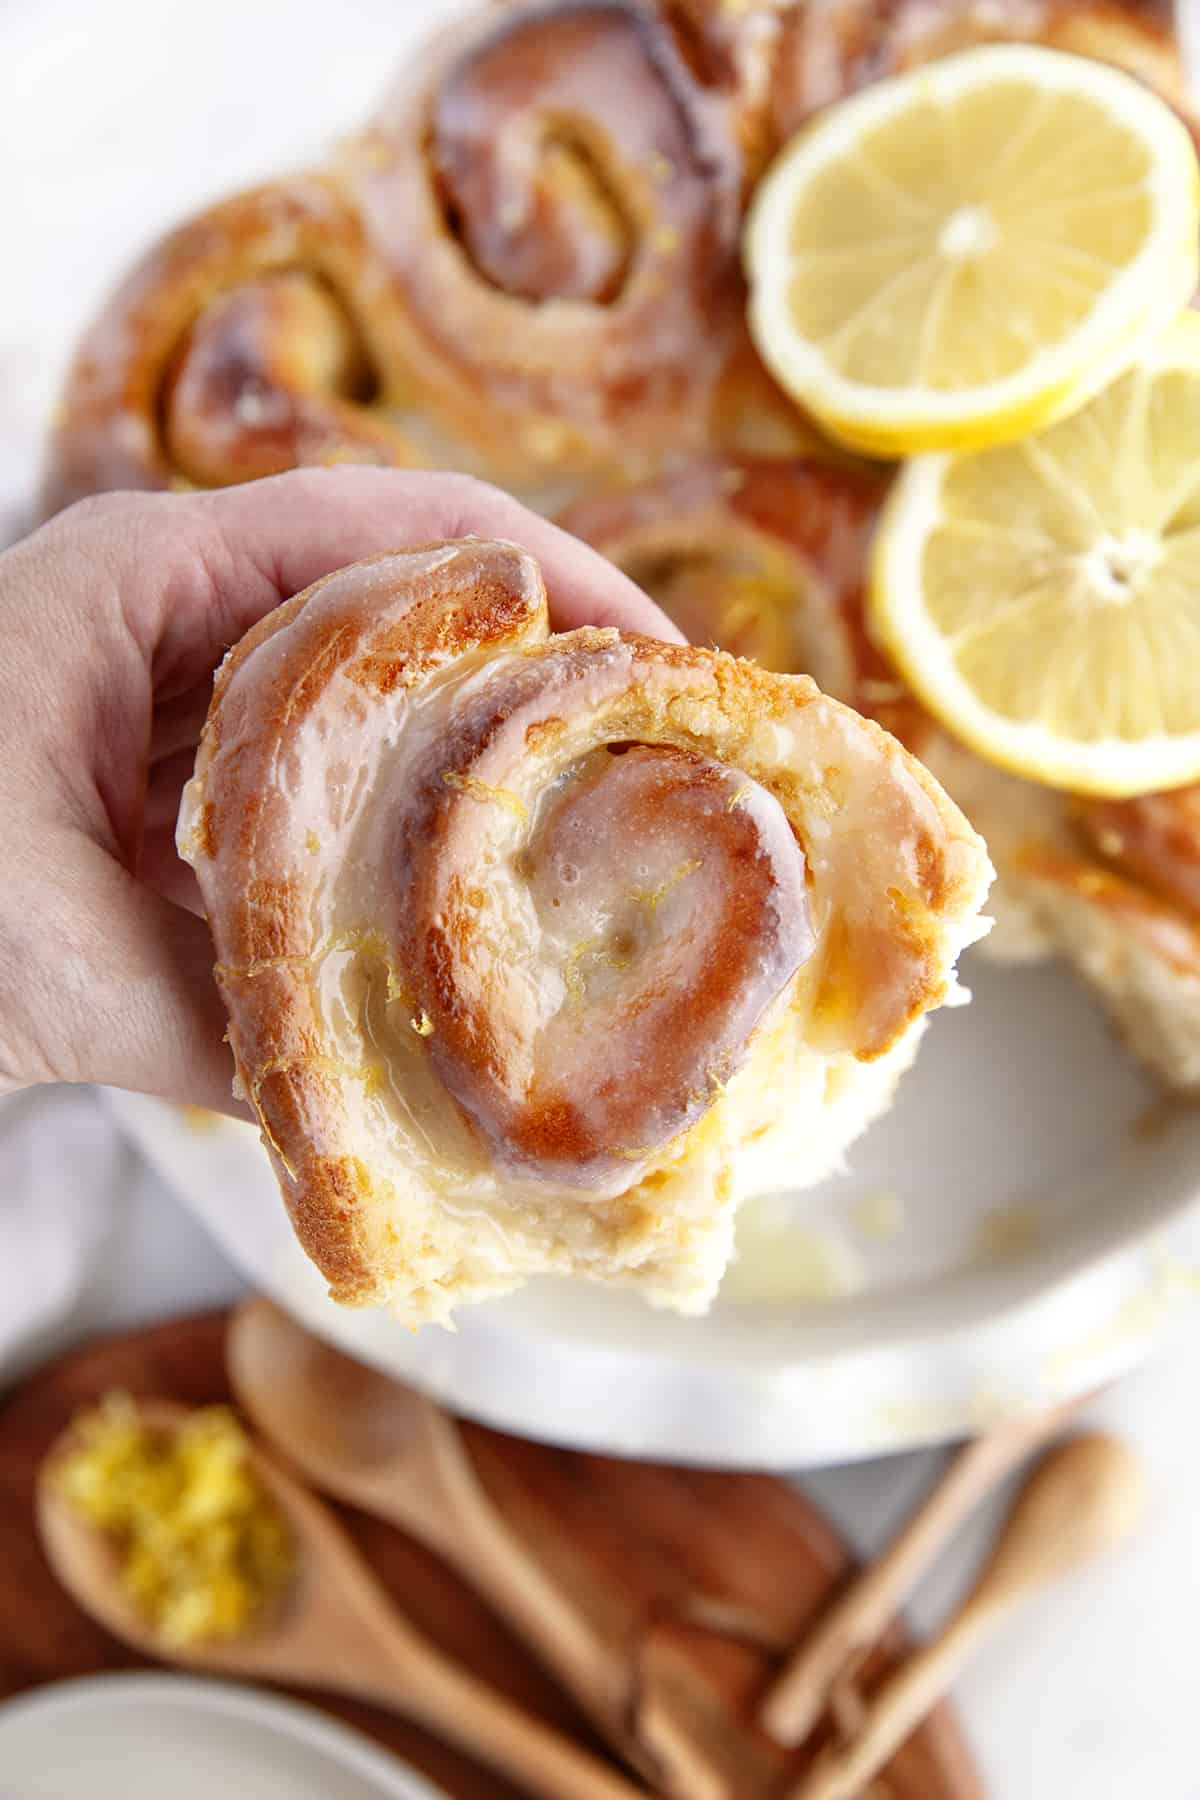 Holding a sweet roll showing lemon zest on top. 